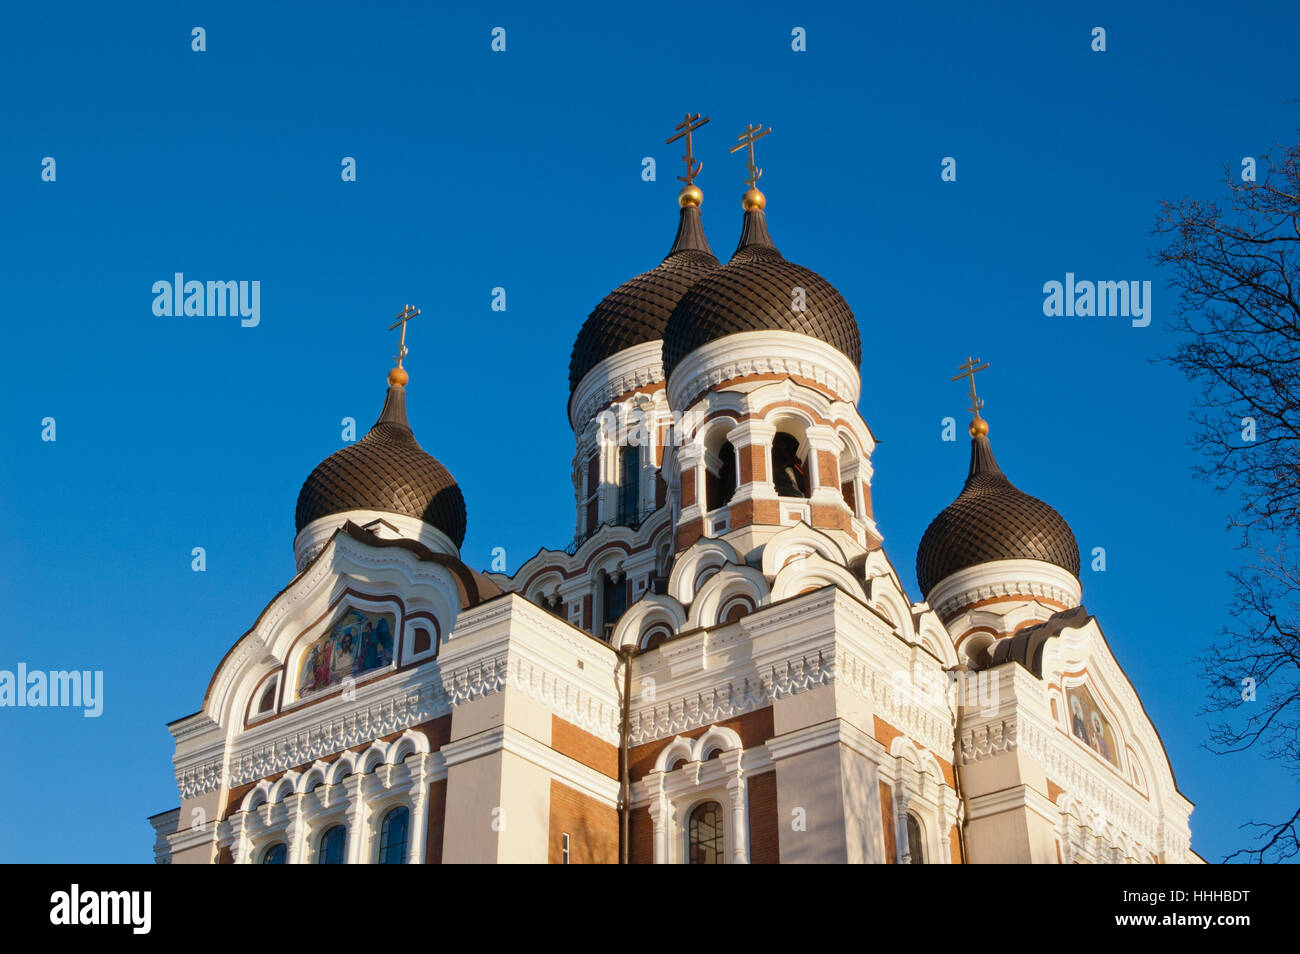 orthodox, blue, tower, travel, architectural, religion, religious, church, Stock Photo